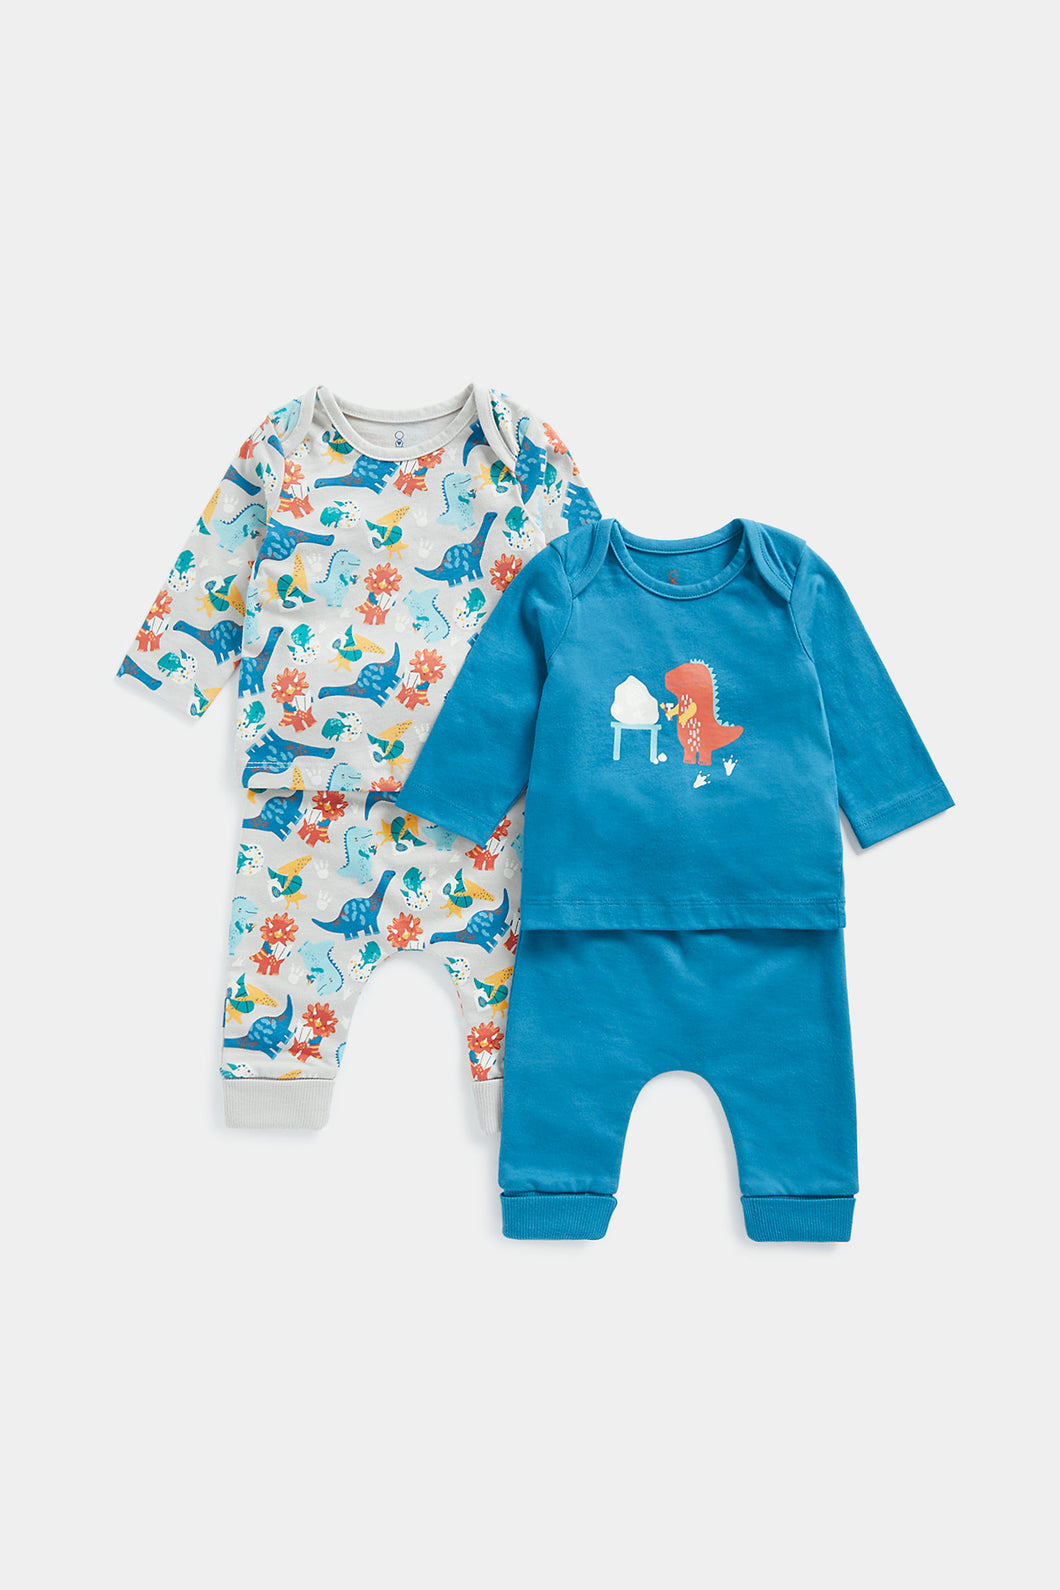 Mothercare Dinosaur T-Shirts and Joggers - 4 Piece Set